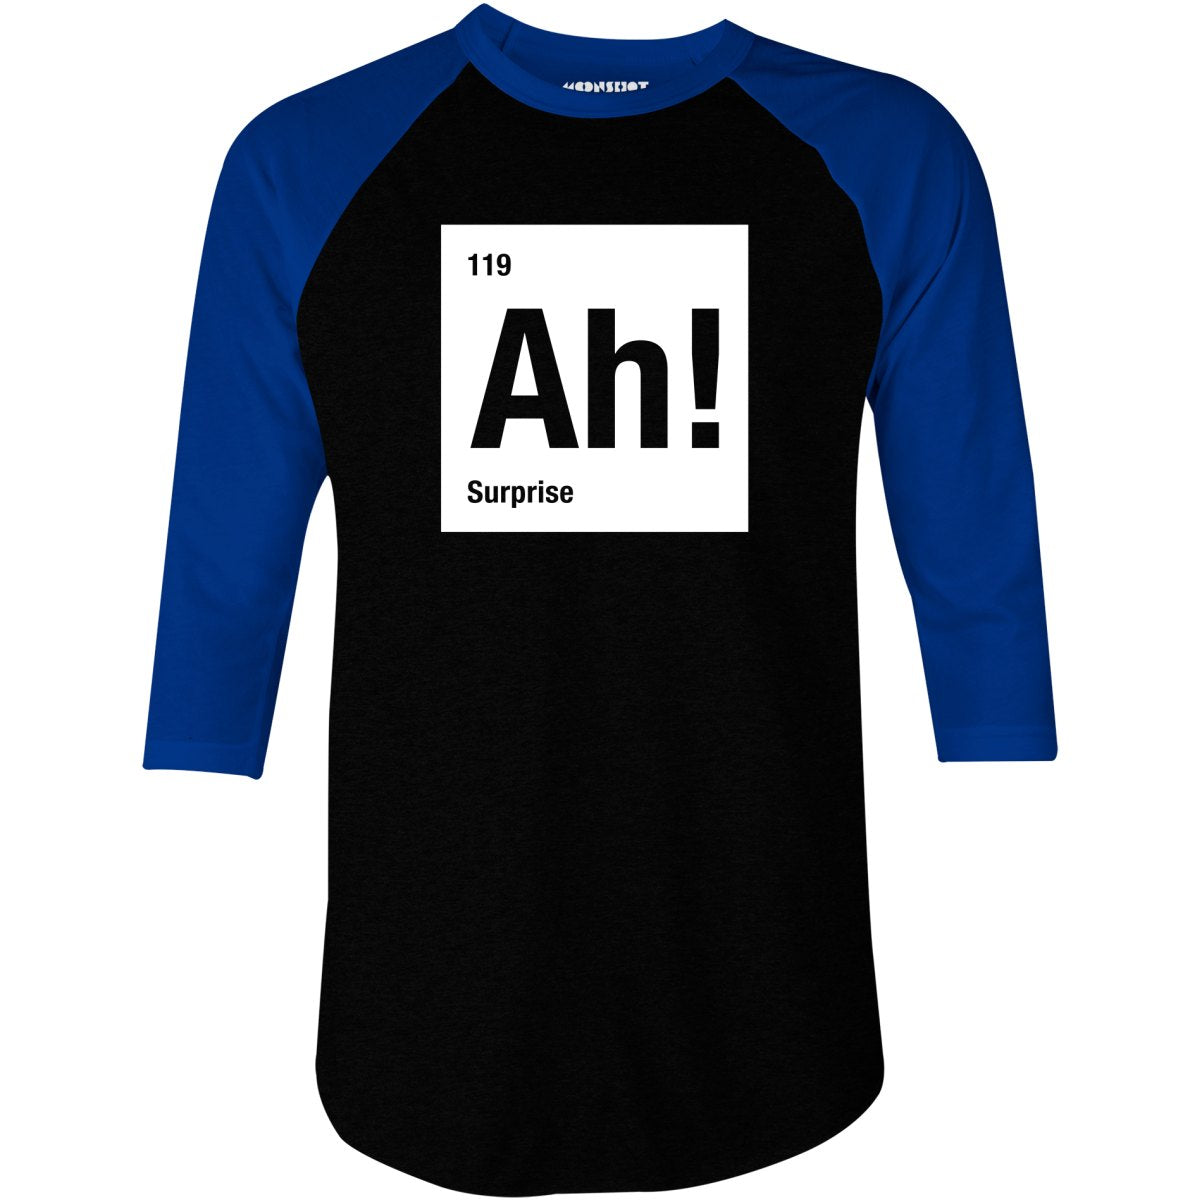 Ah! The Element of Surprise - 3/4 Sleeve Raglan T-Shirt